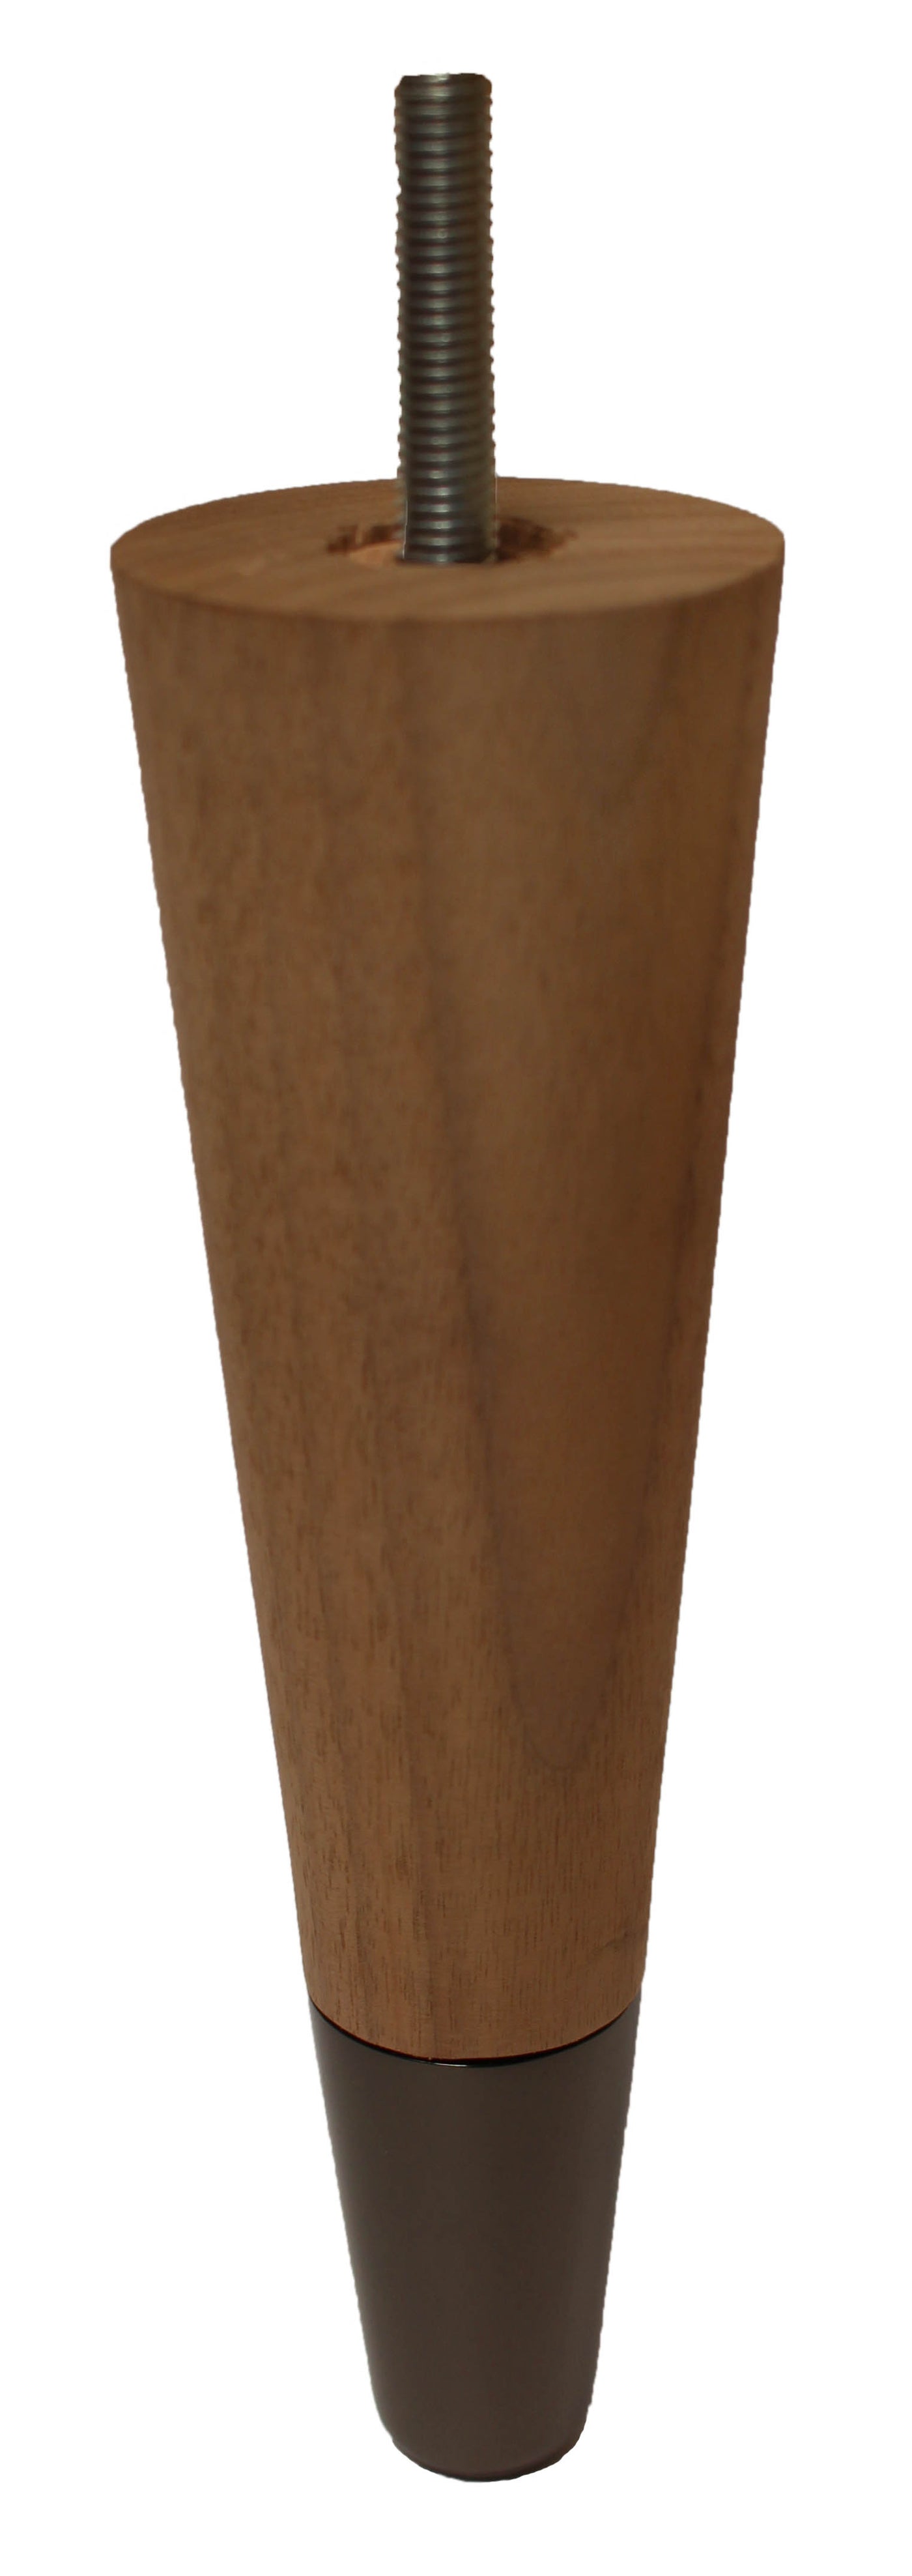 Agata Solid Walnut Tapered Furniture Legs - Raw Finish - Black Chrome Slipper Cups - Set of 4